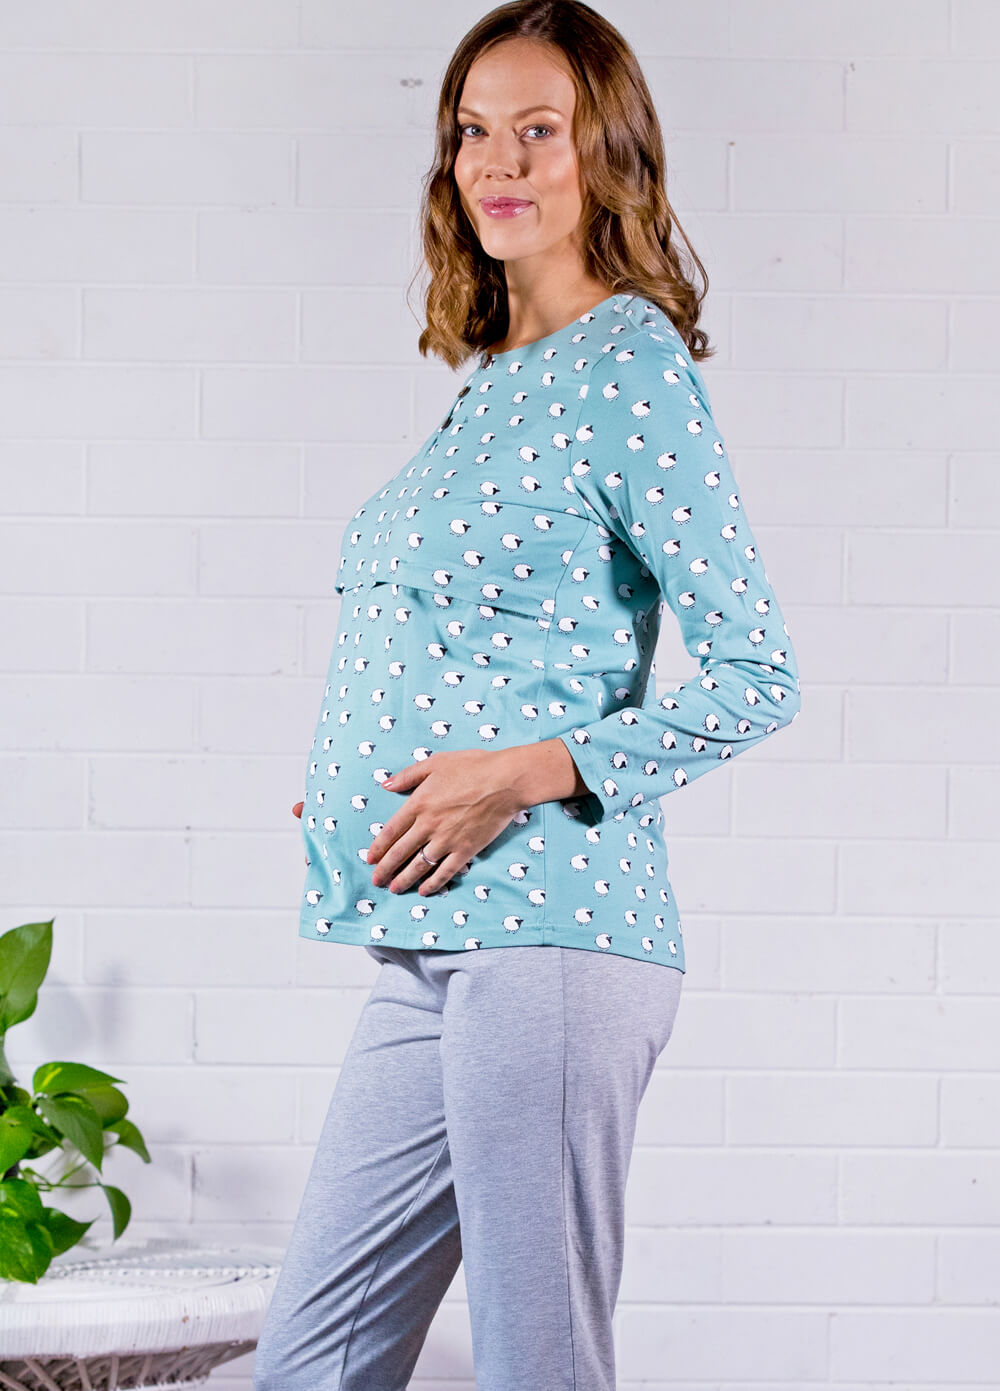 Uzelle Maternity Nursing PJ Set by Lait & Co